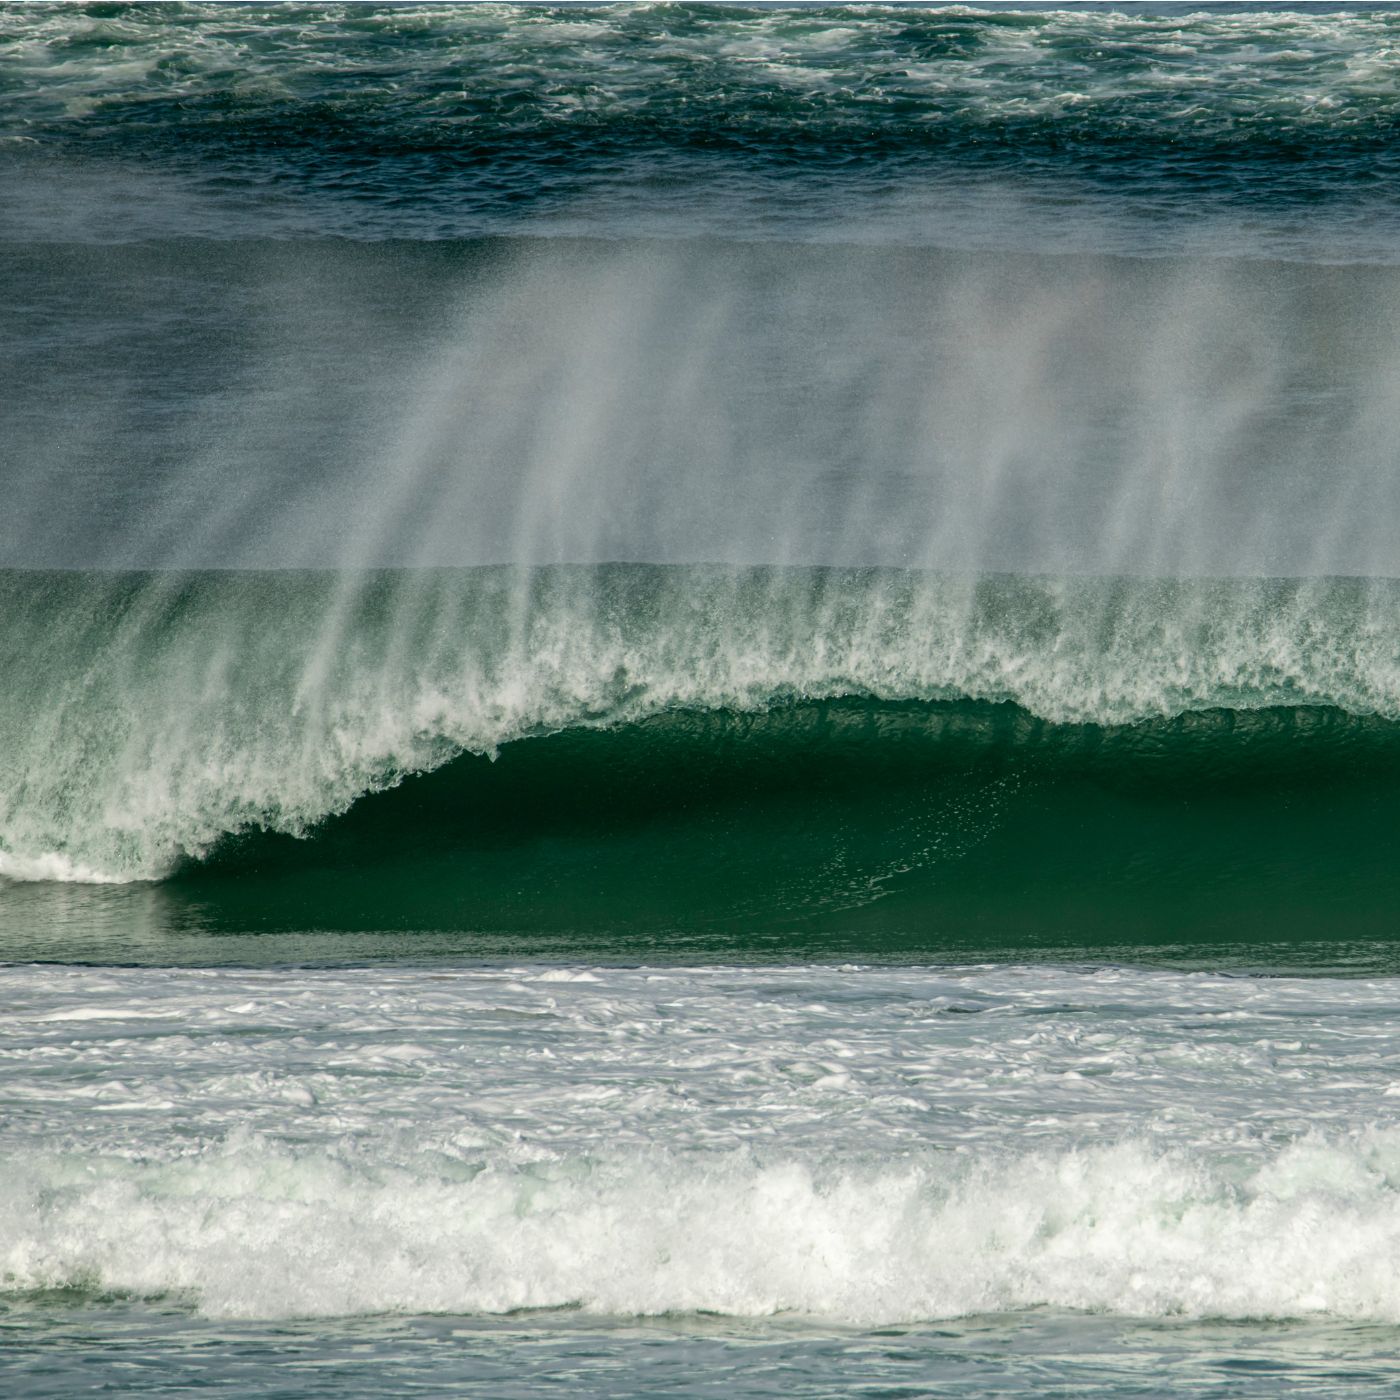 La ola perfecta para surfear